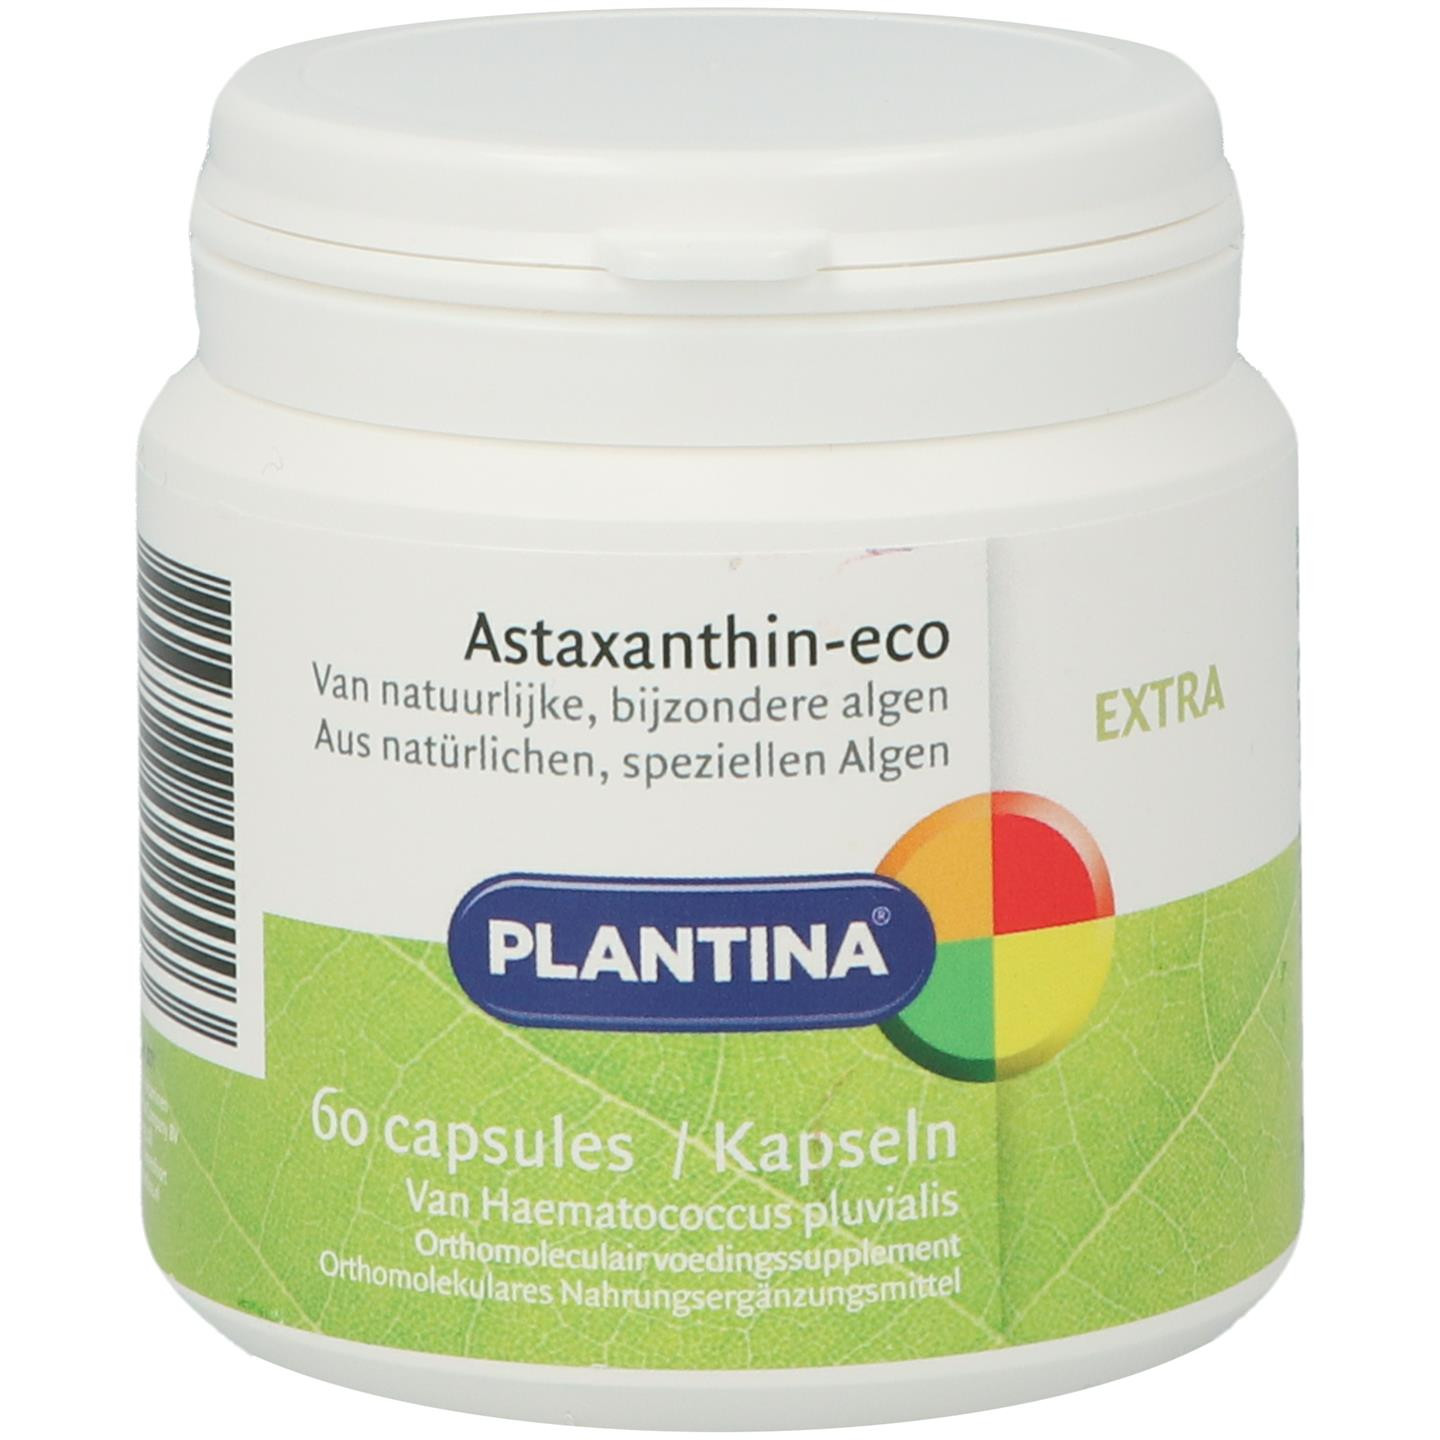 Astaxanthin-eco